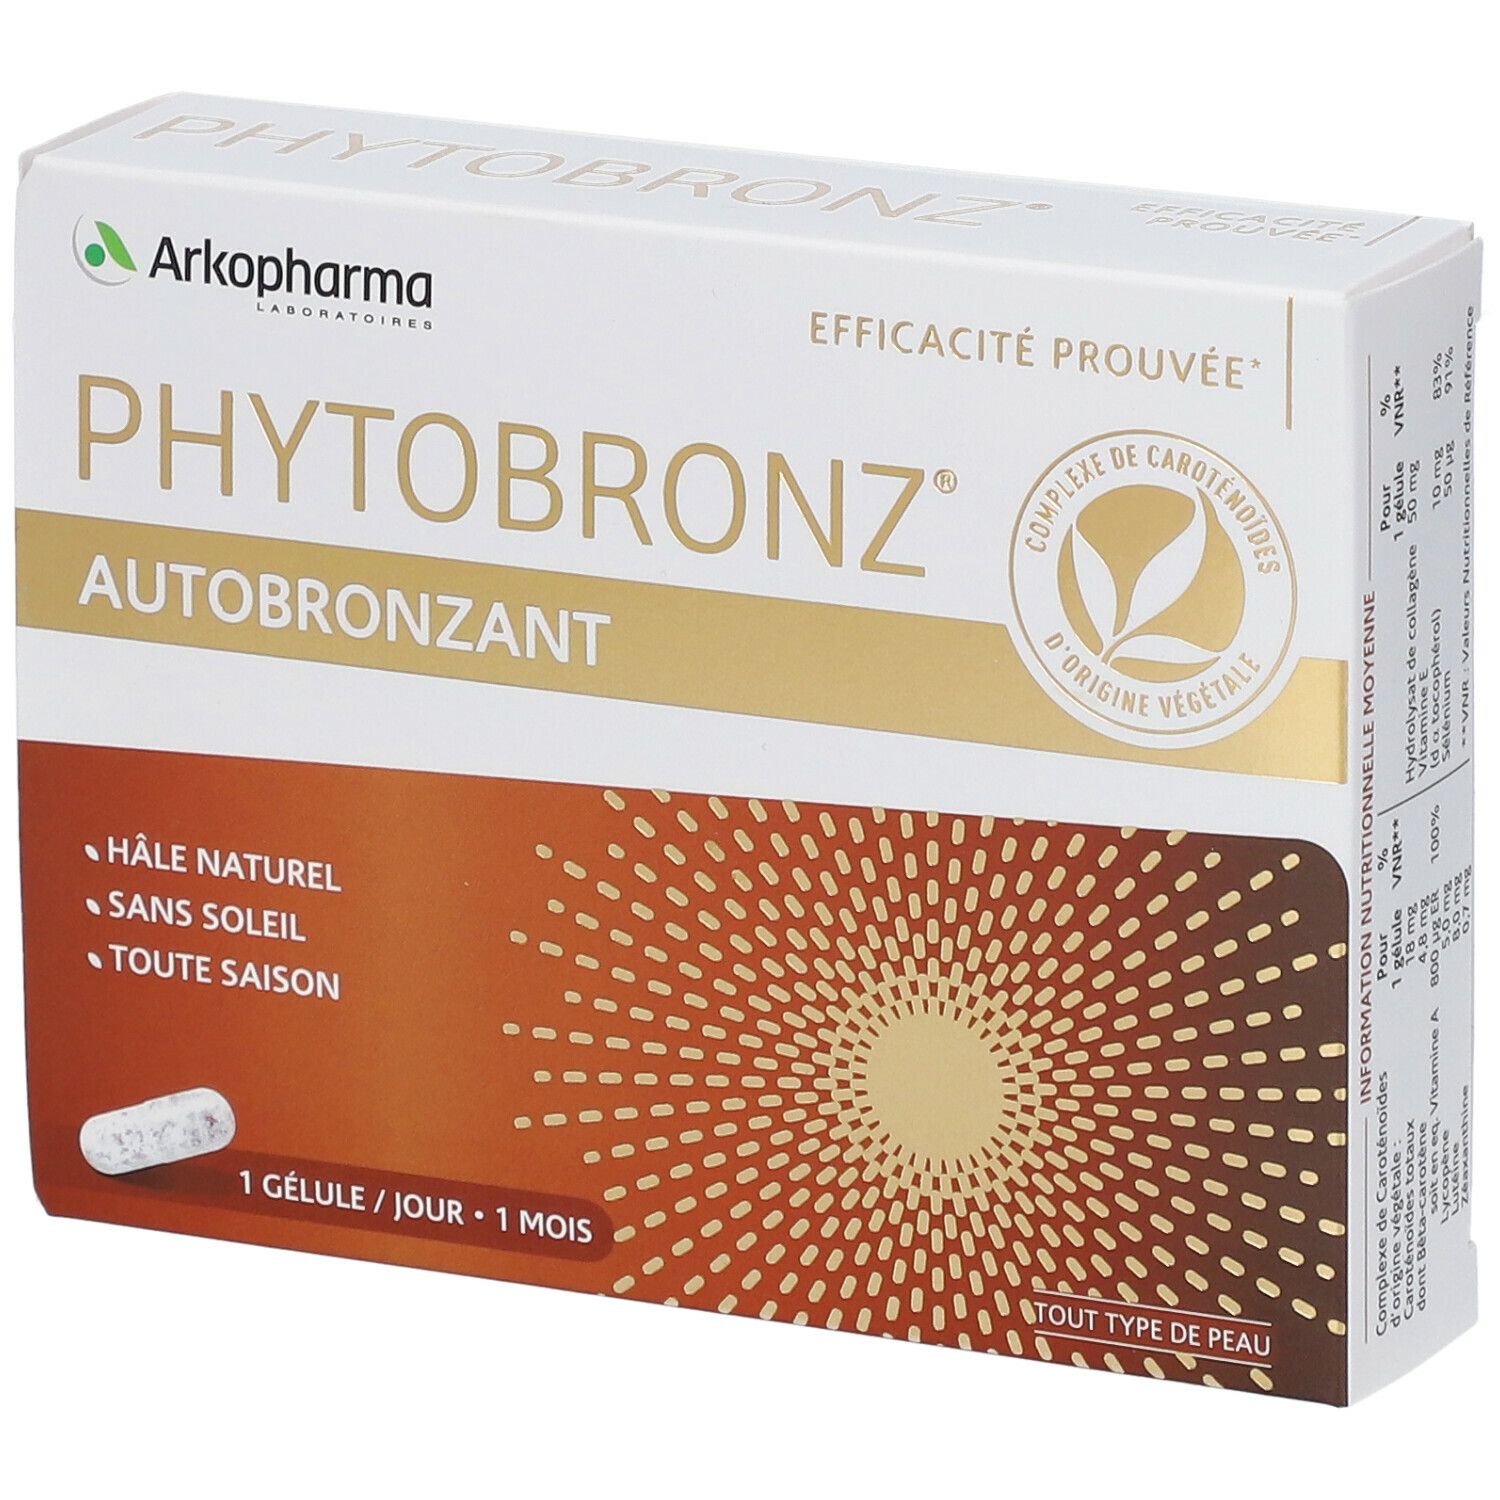 Arkopharma Phytobronz® Autobronzant